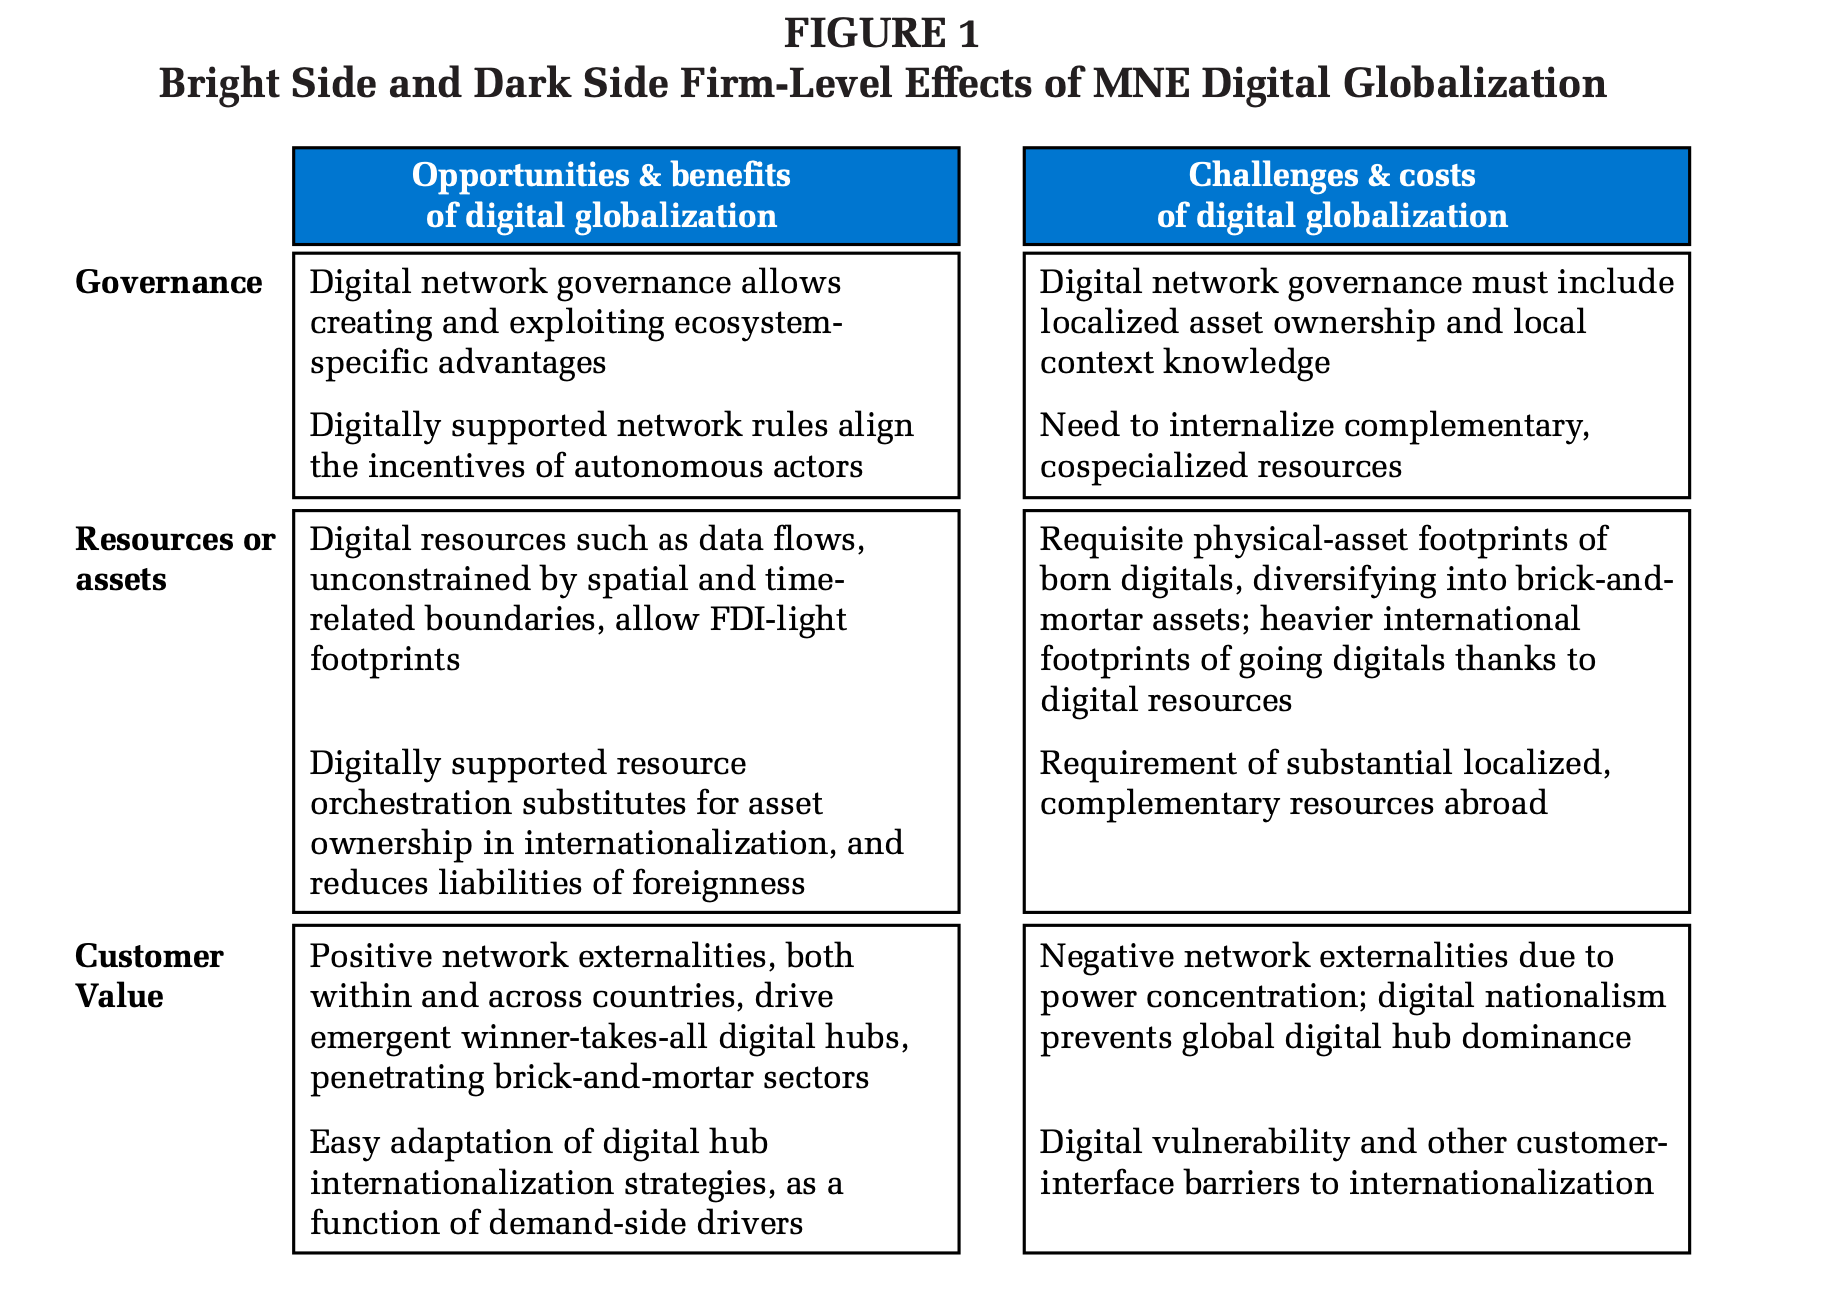 The dark side of digital globalization